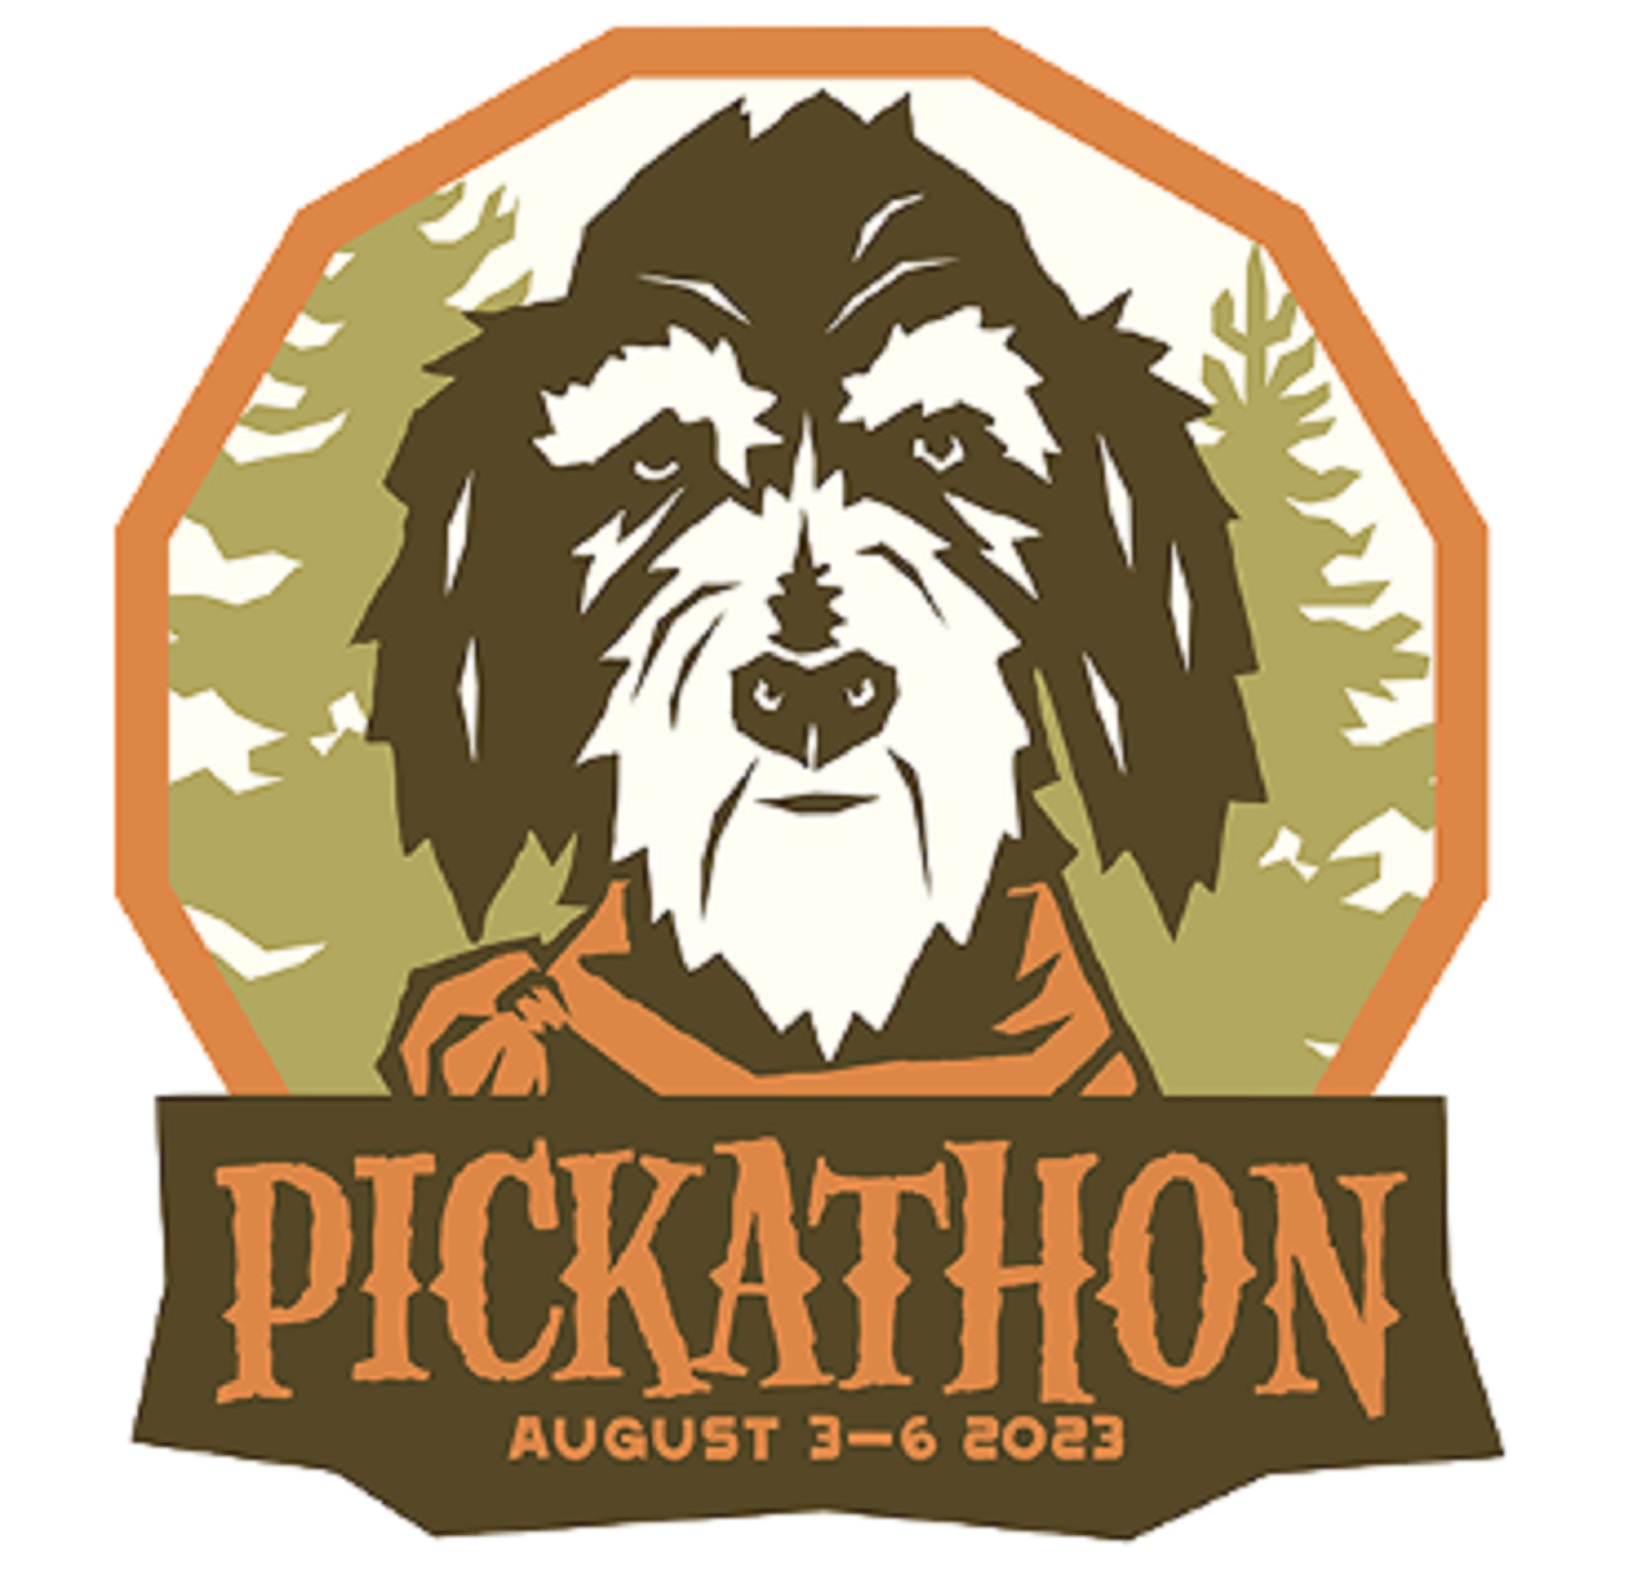 Pickathon Announces 2023 Full Artist Lineup